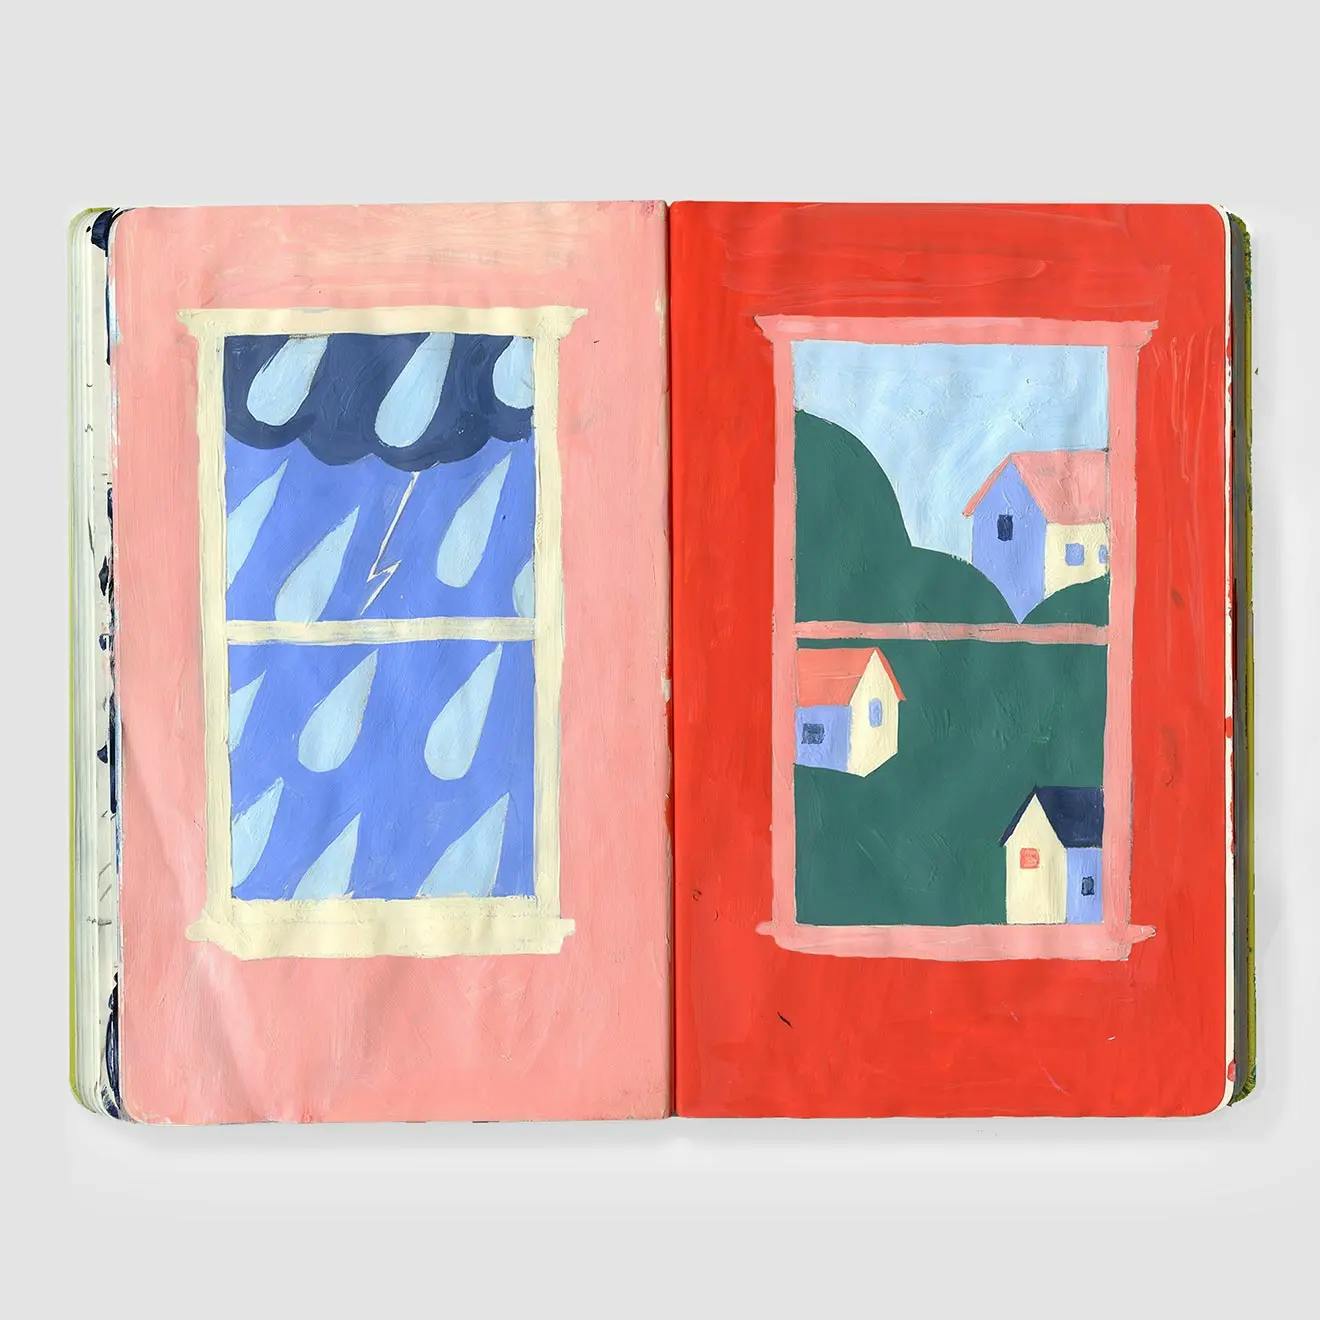 Artist Jackson Joyce's journal with colorful paintings of window scenes.